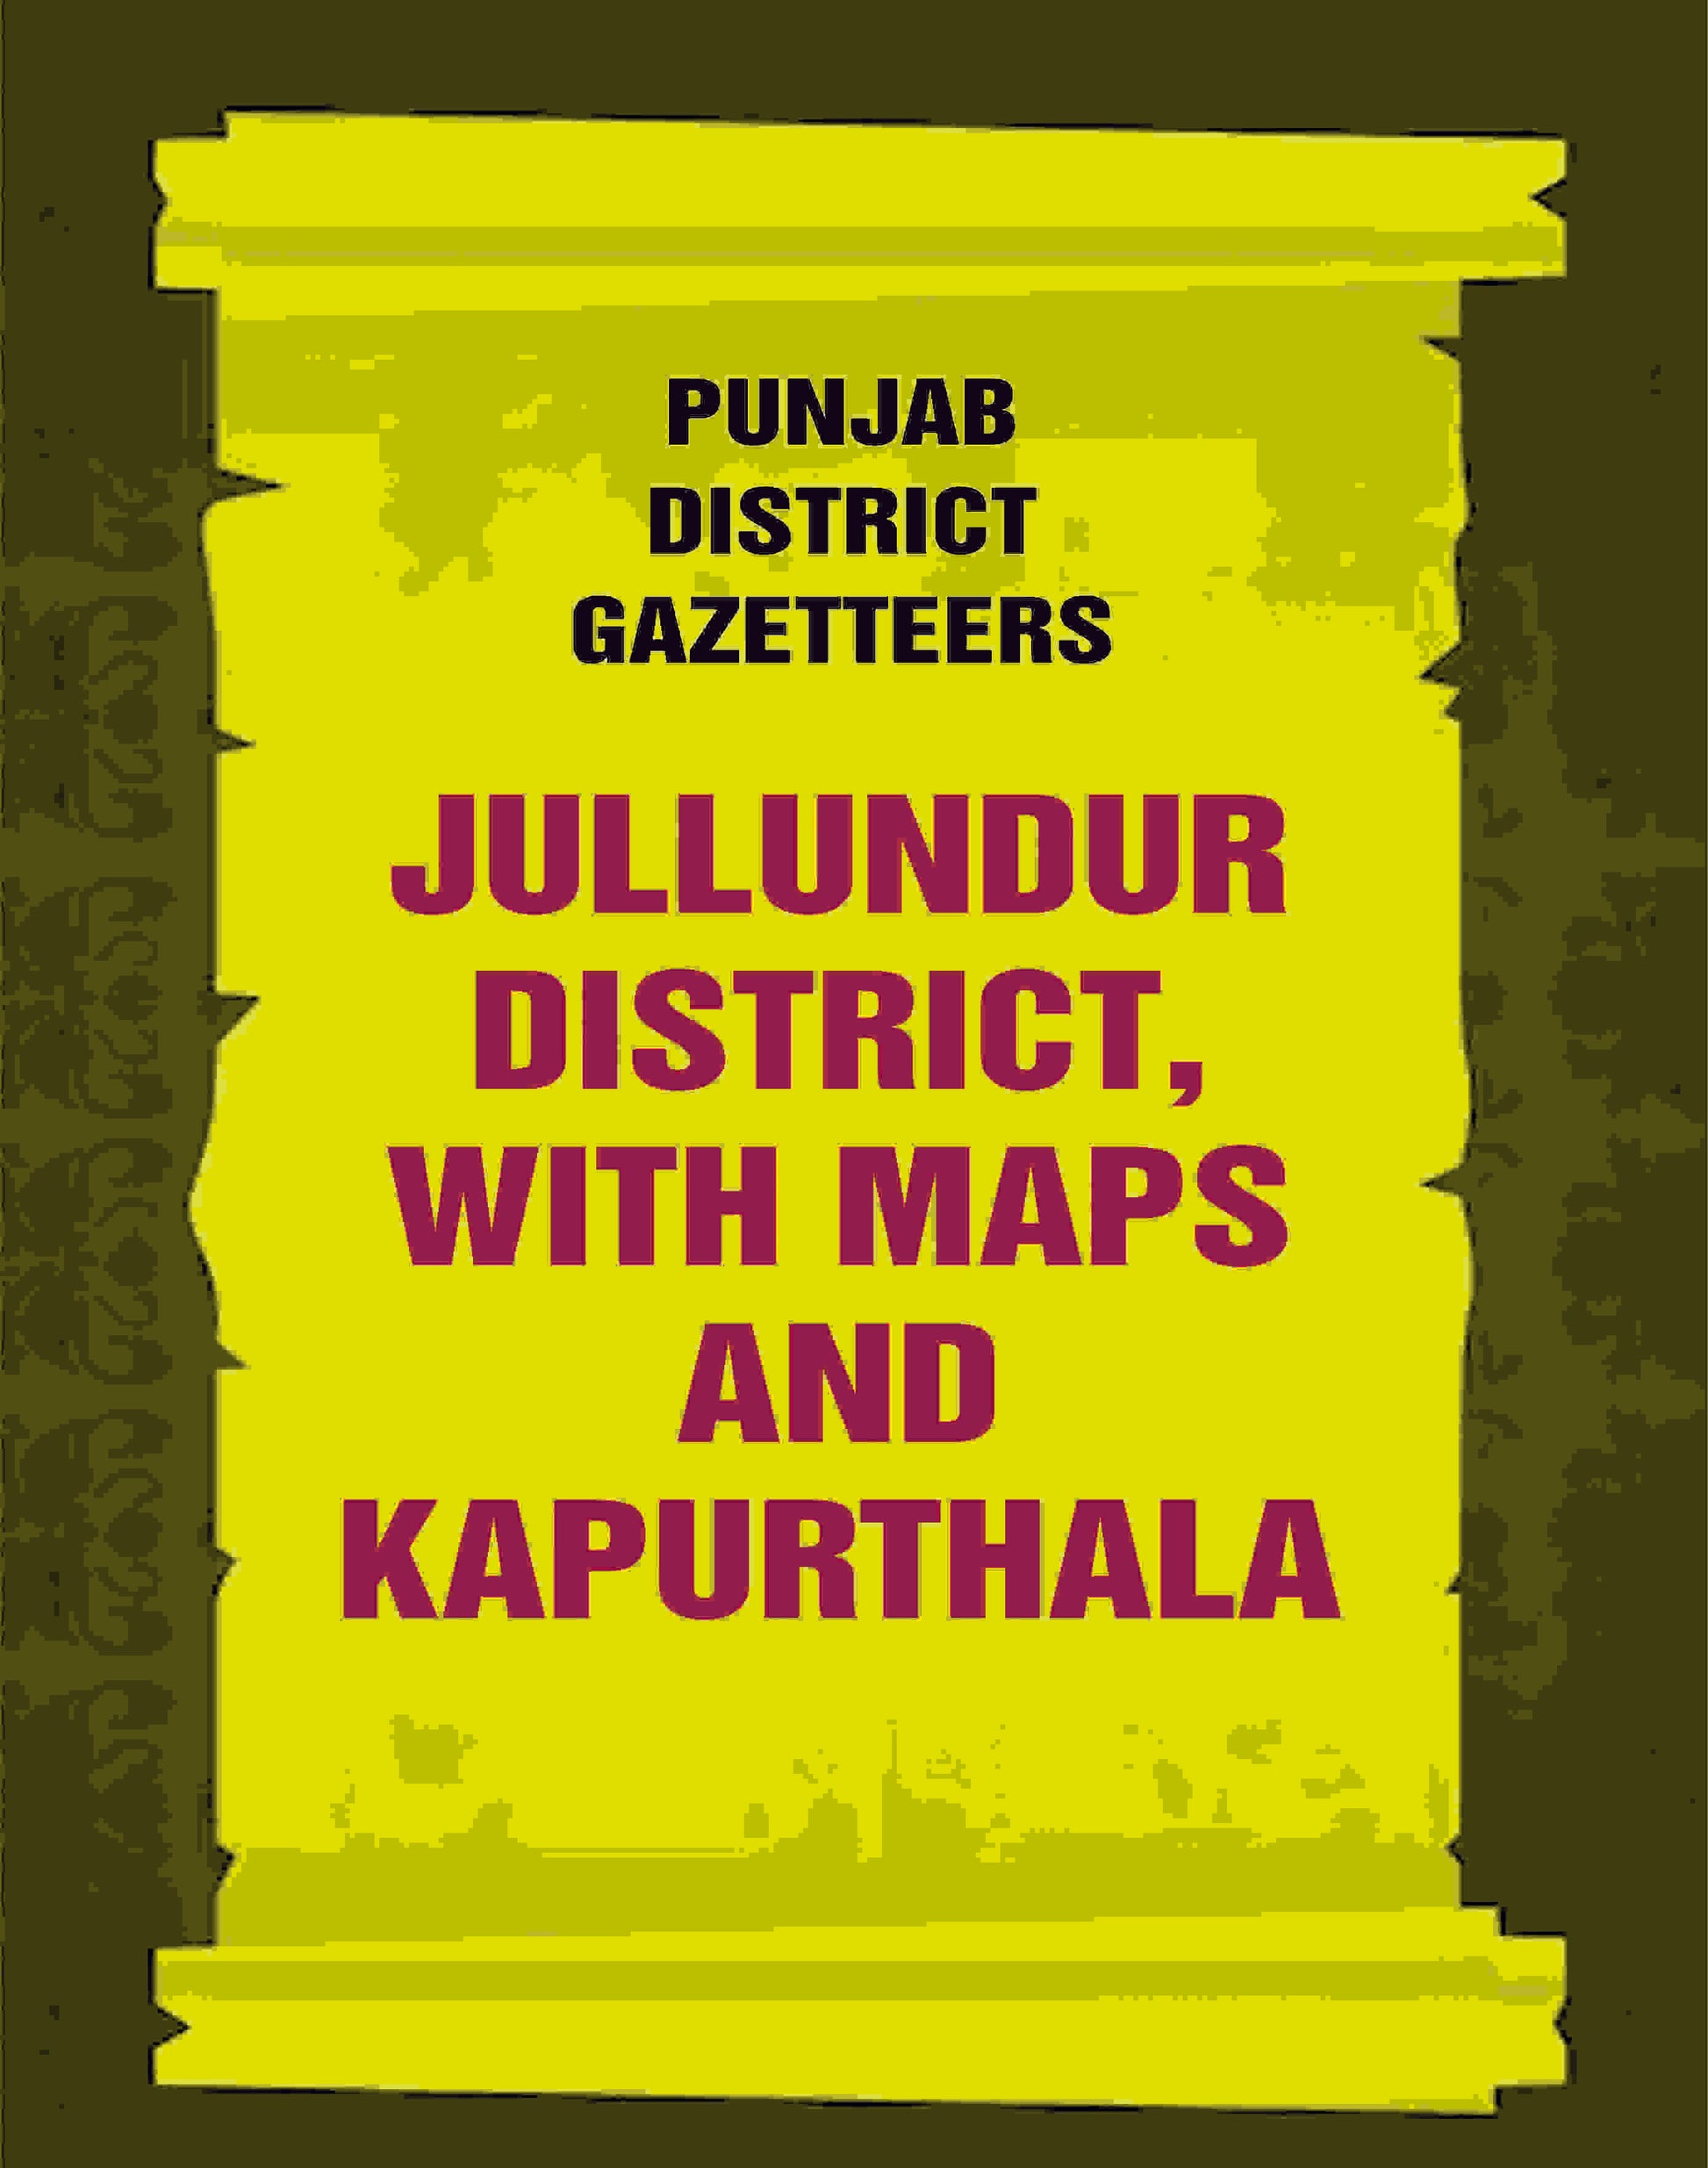 Punjab District Gazetteers: Jullundur District, with maps and Kapurthala